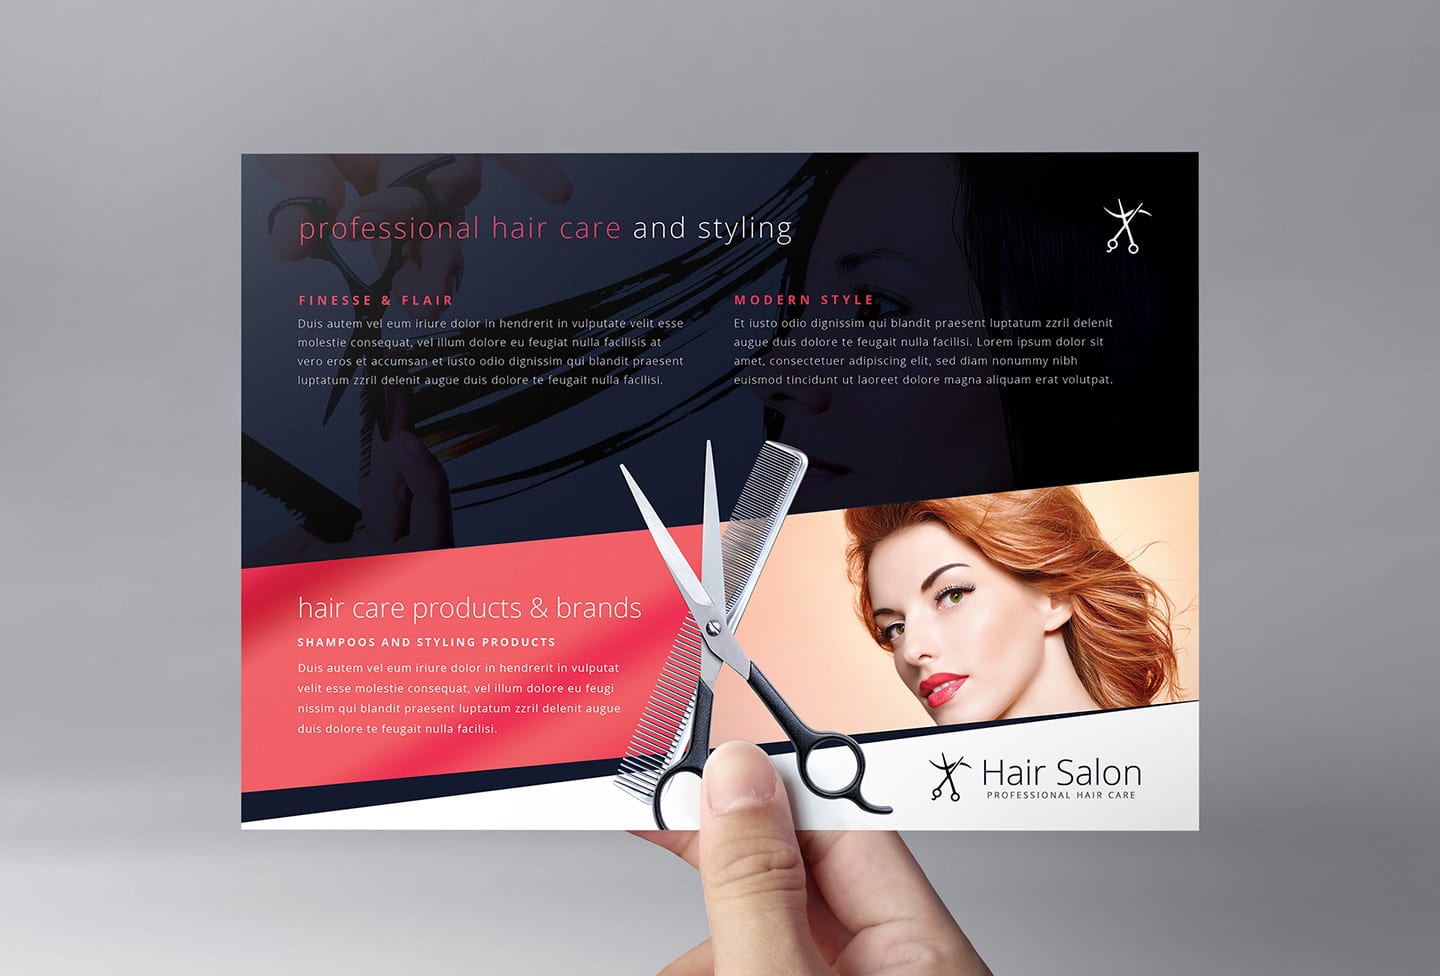 Hair Salon Flyer Template